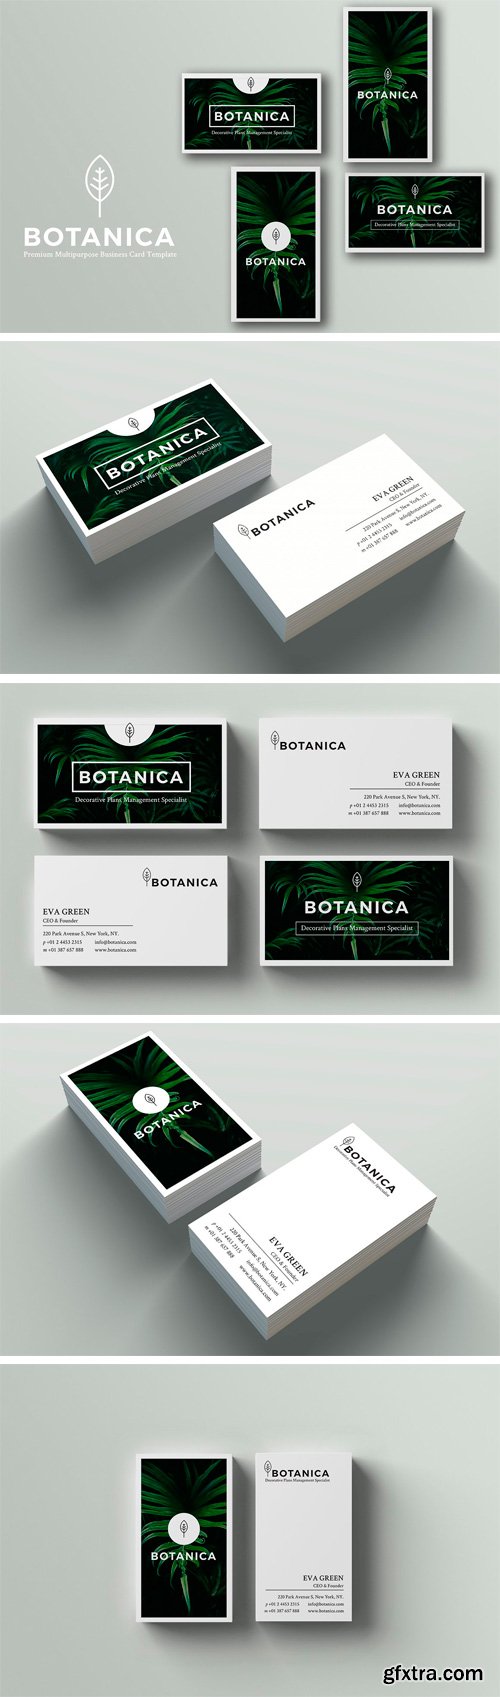 CM - BOTANICA Business Card Template 1682296